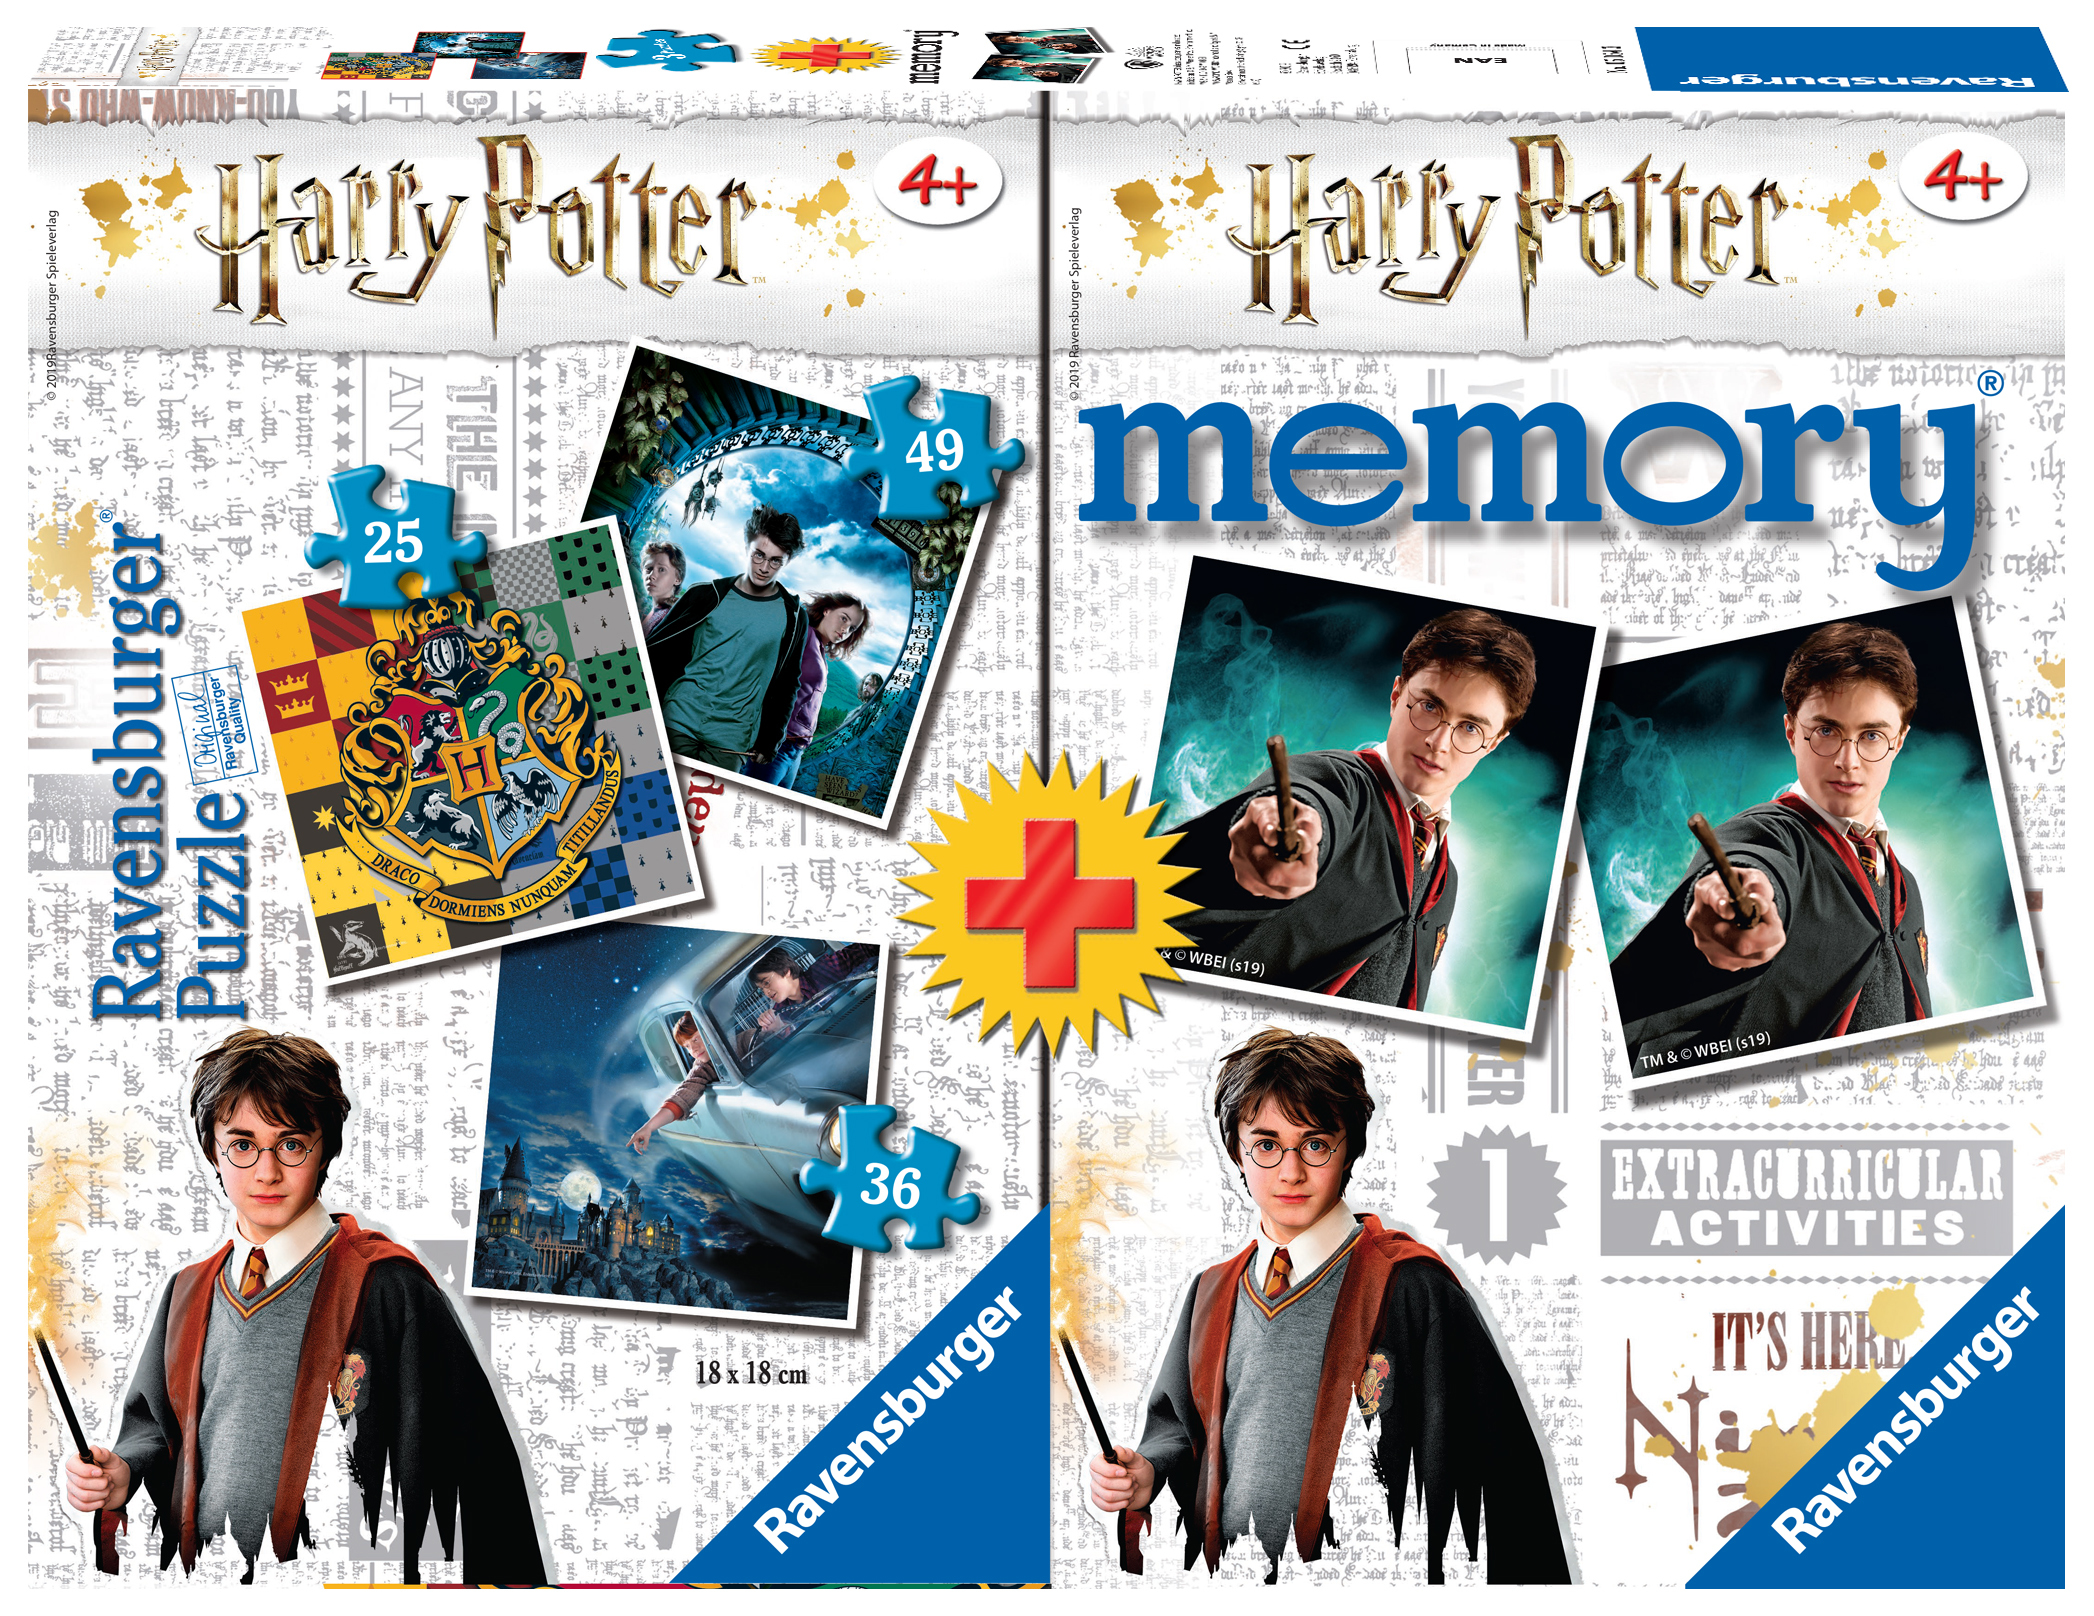 Ravensburger multipack: 3 puzzle 25 pezzi & memory - harry potter - Harry Potter, RAVENSBURGER